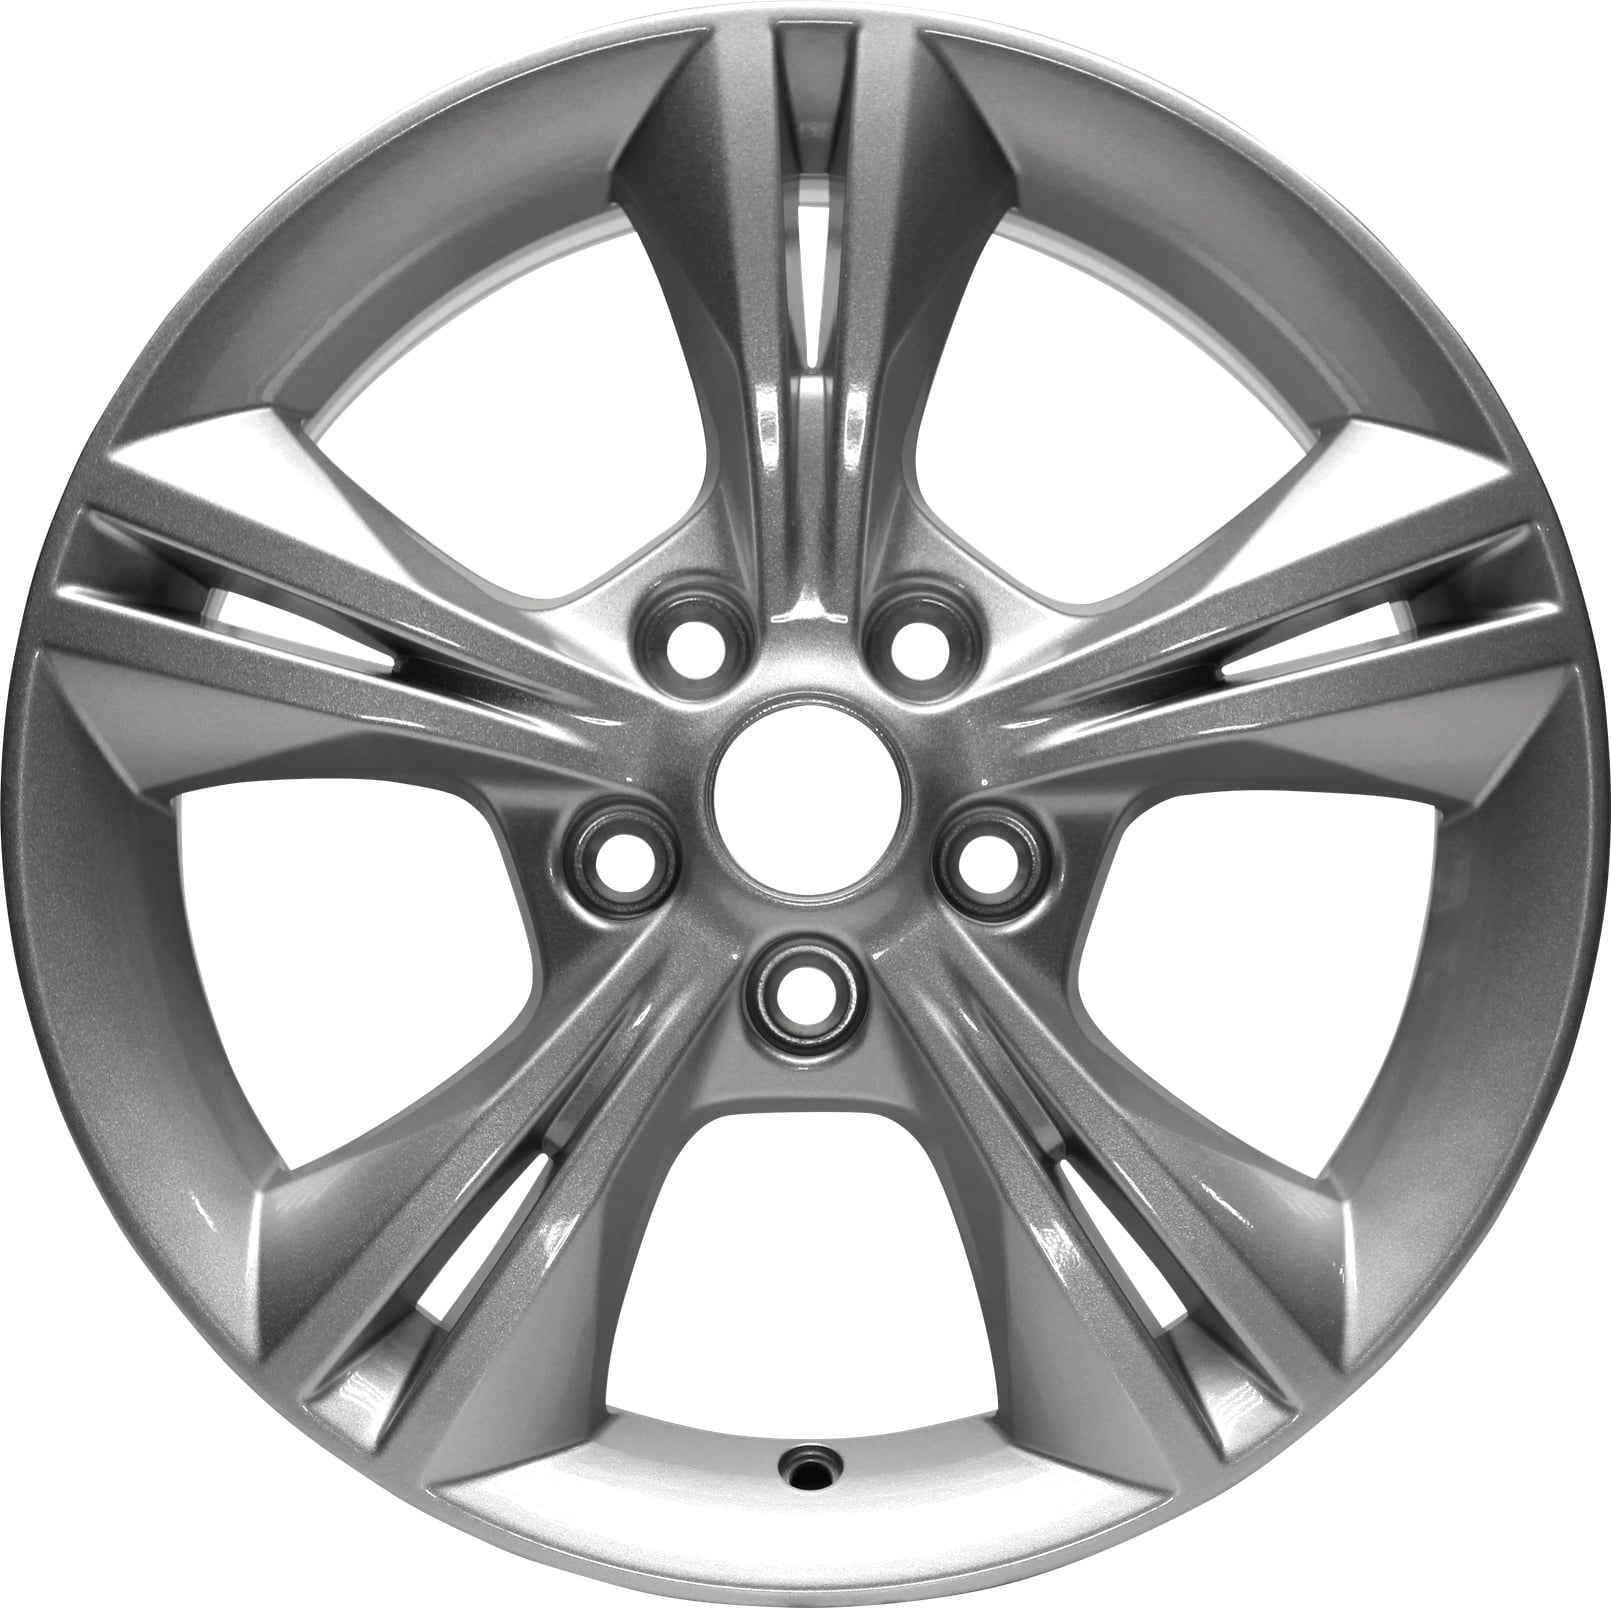 16 Inch Aluminum Wheel Rim For 12 14 Ford Focus 5 Lug Tire Fits R16 Walmart Com Walmart Com